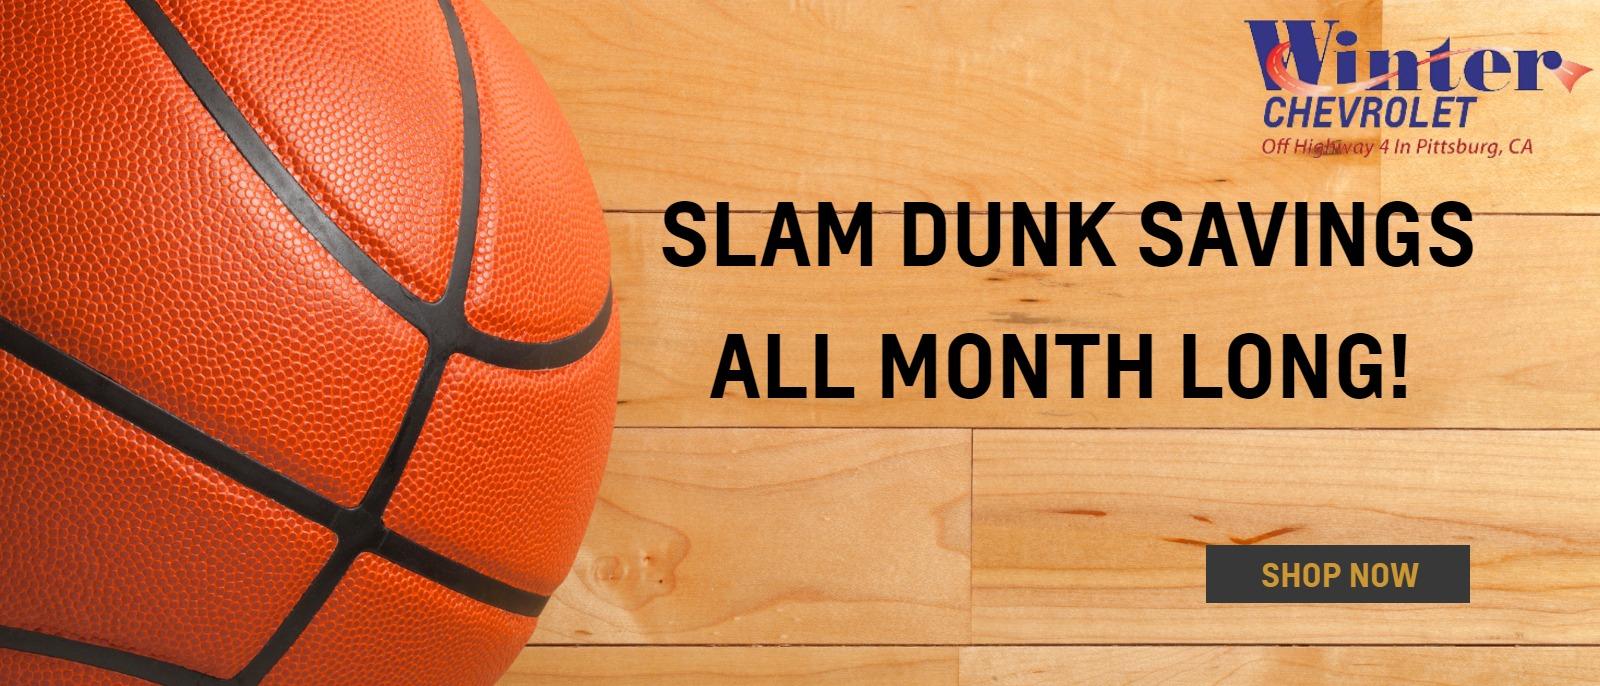 Slam Dunk Savings
ALL MONTH LONG!

Shop Now